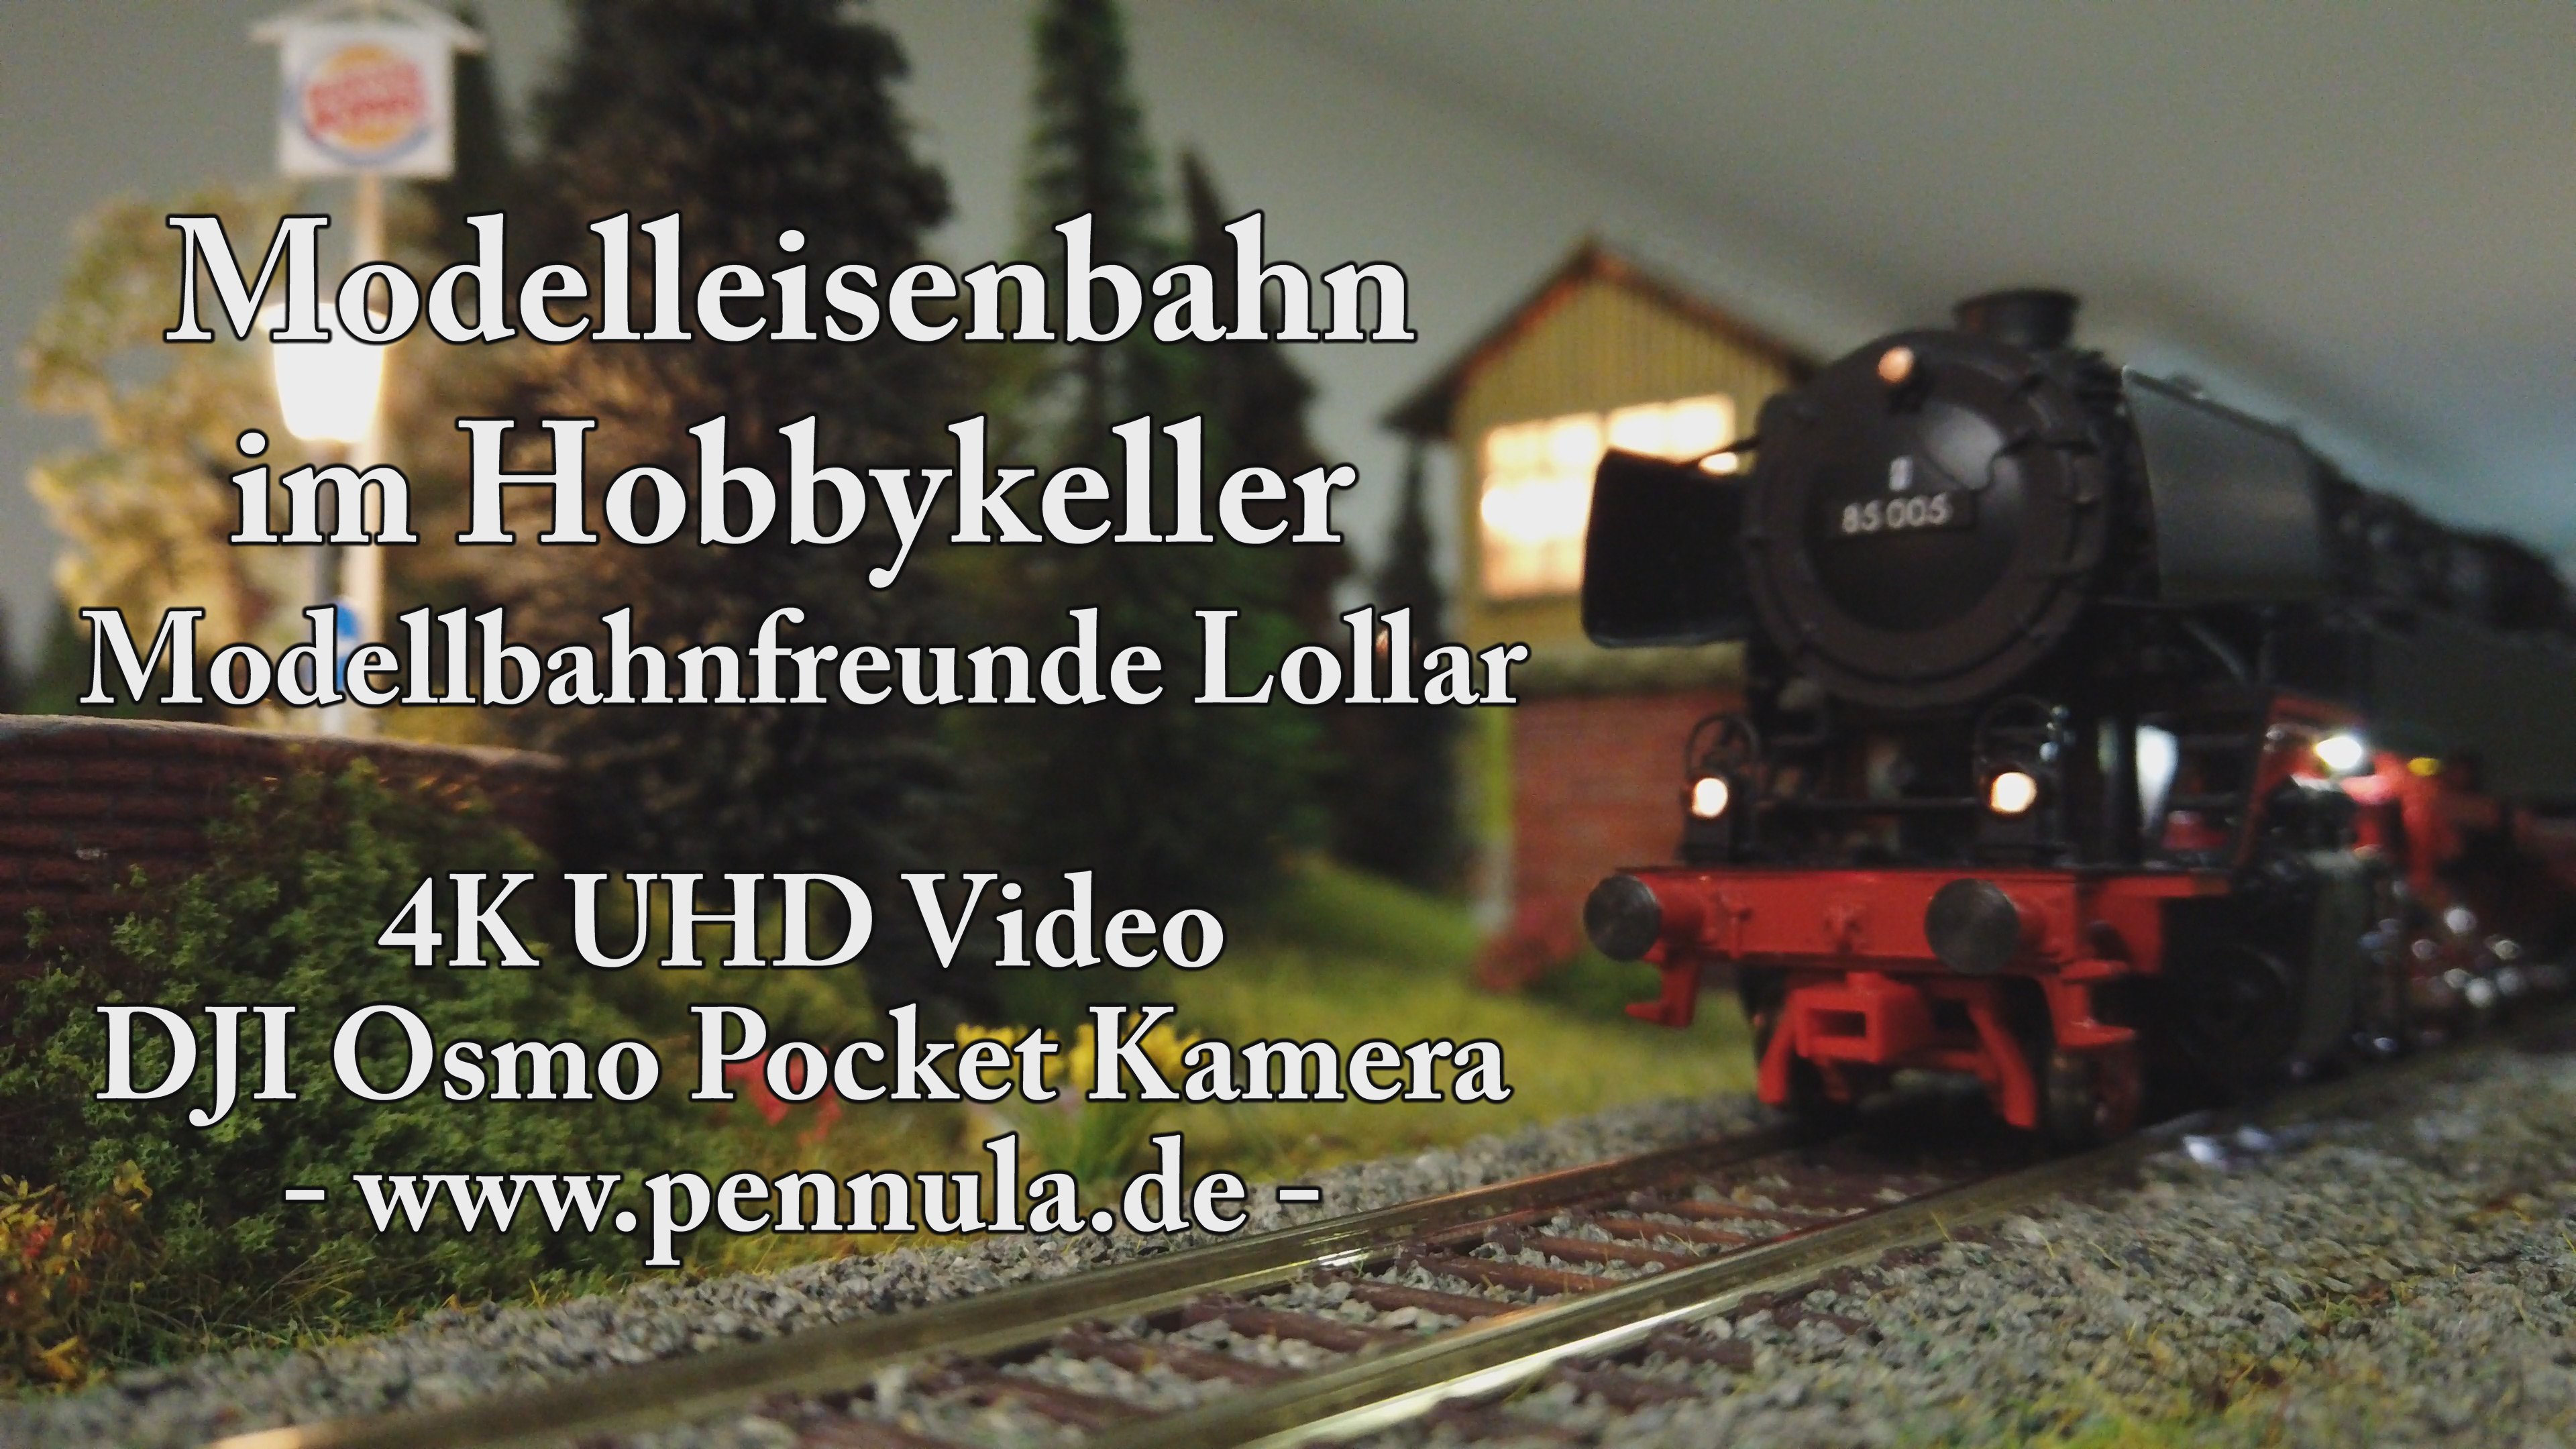 Kamera DJI Osmo Pocket bei den Modellbahnfreunden Lollar